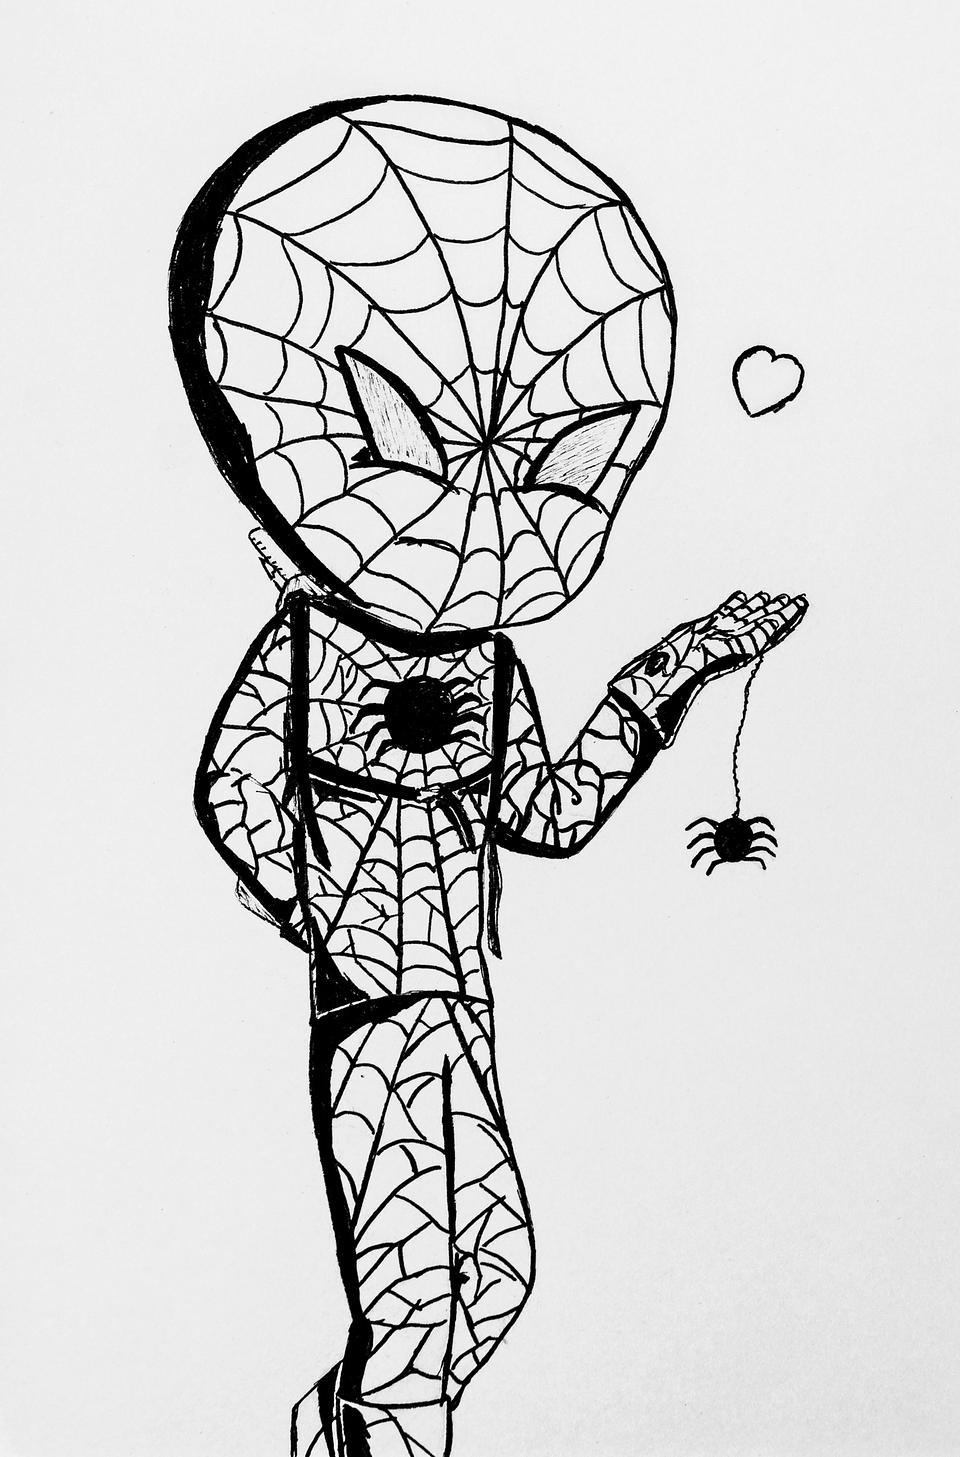 Spiderman Chibi